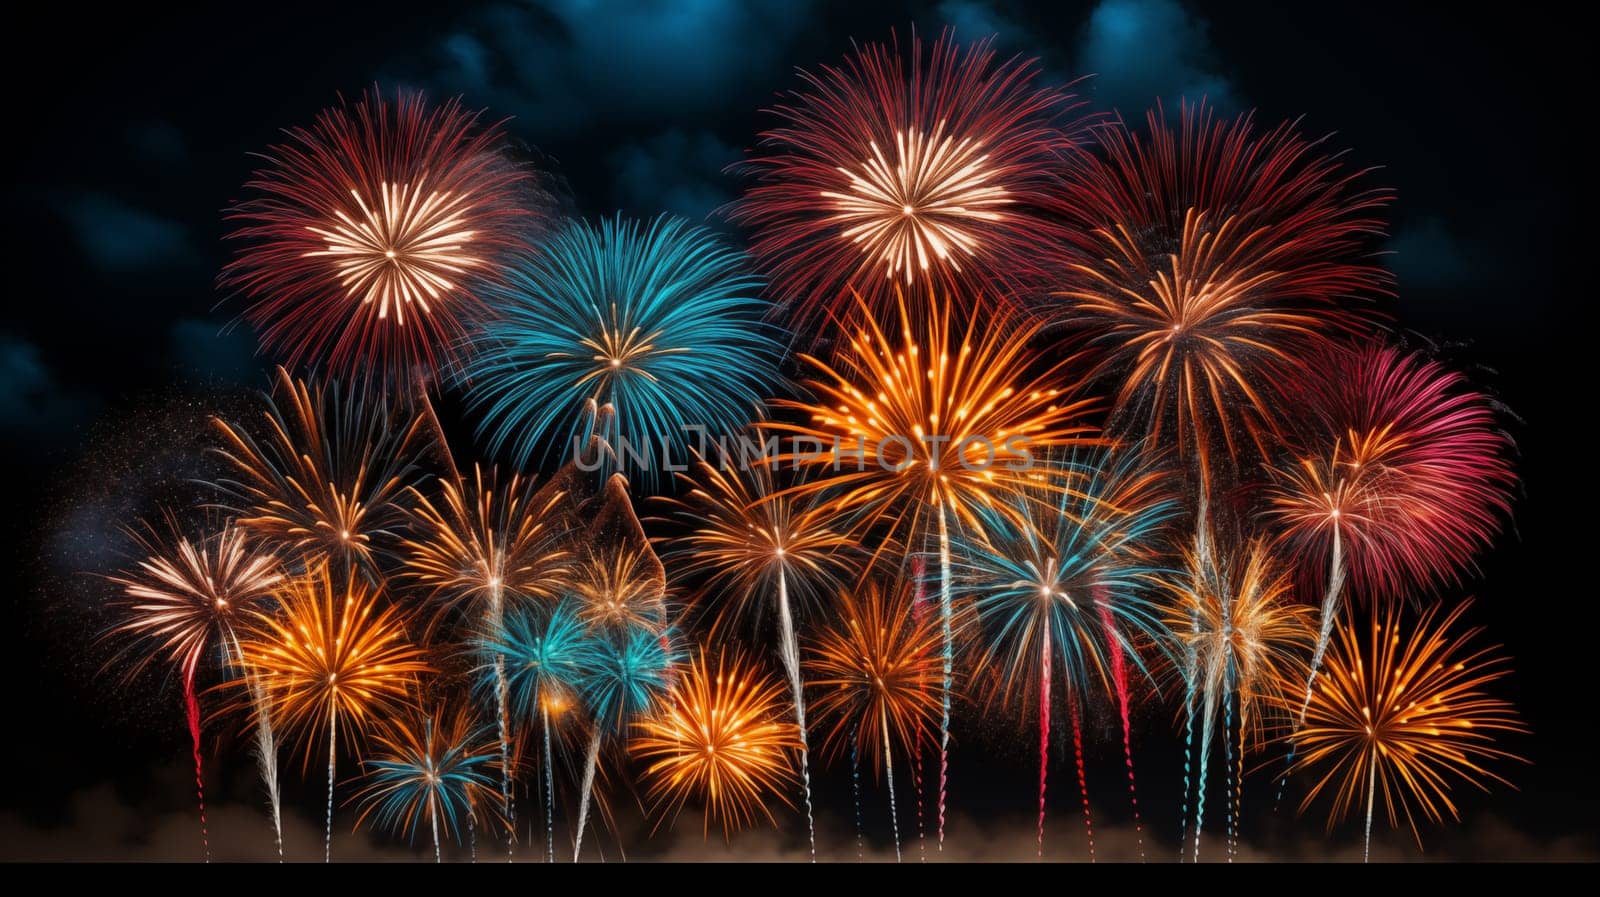 A stunning burst of multicolored fireworks light up the dark sky, symbolizing celebration and festivity.